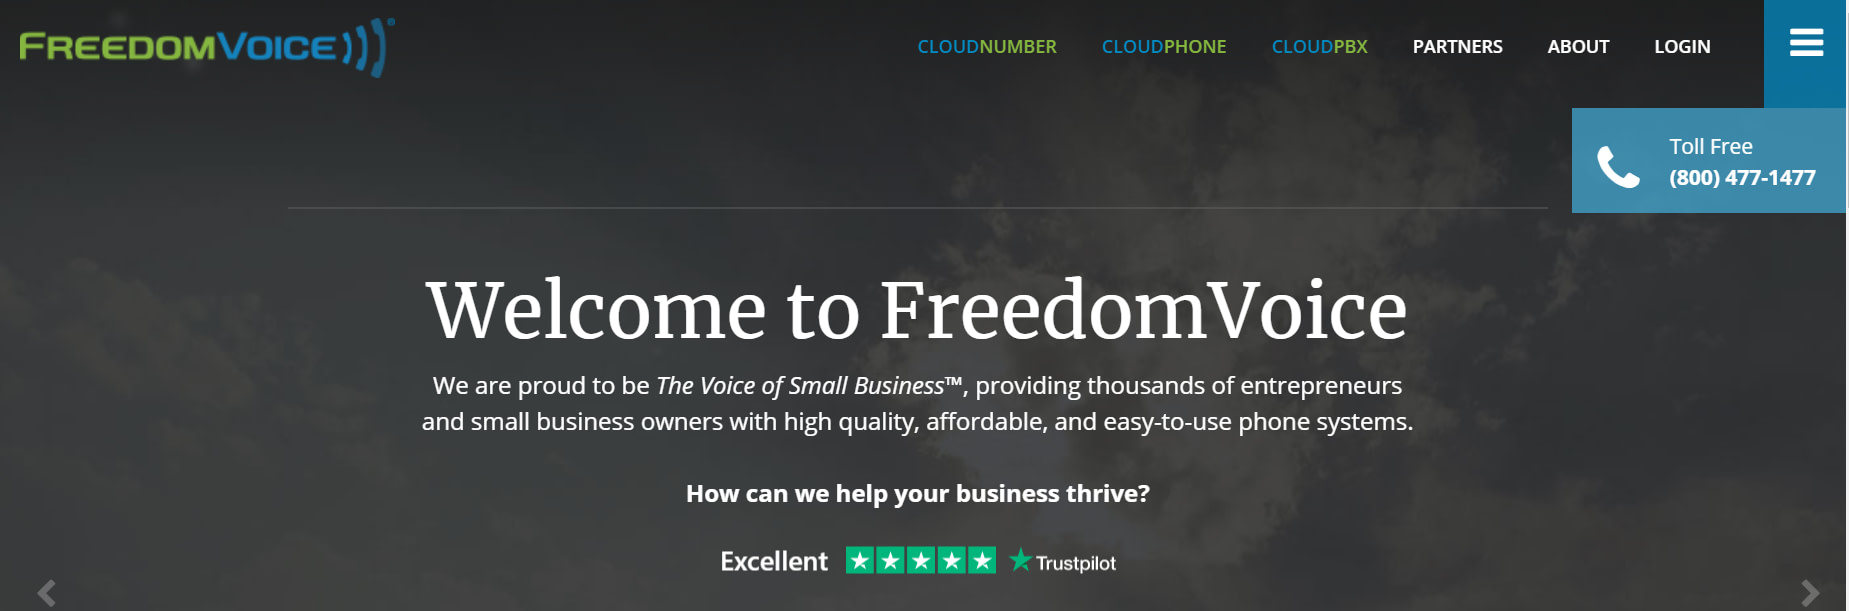 The FreedomVoice homepage.